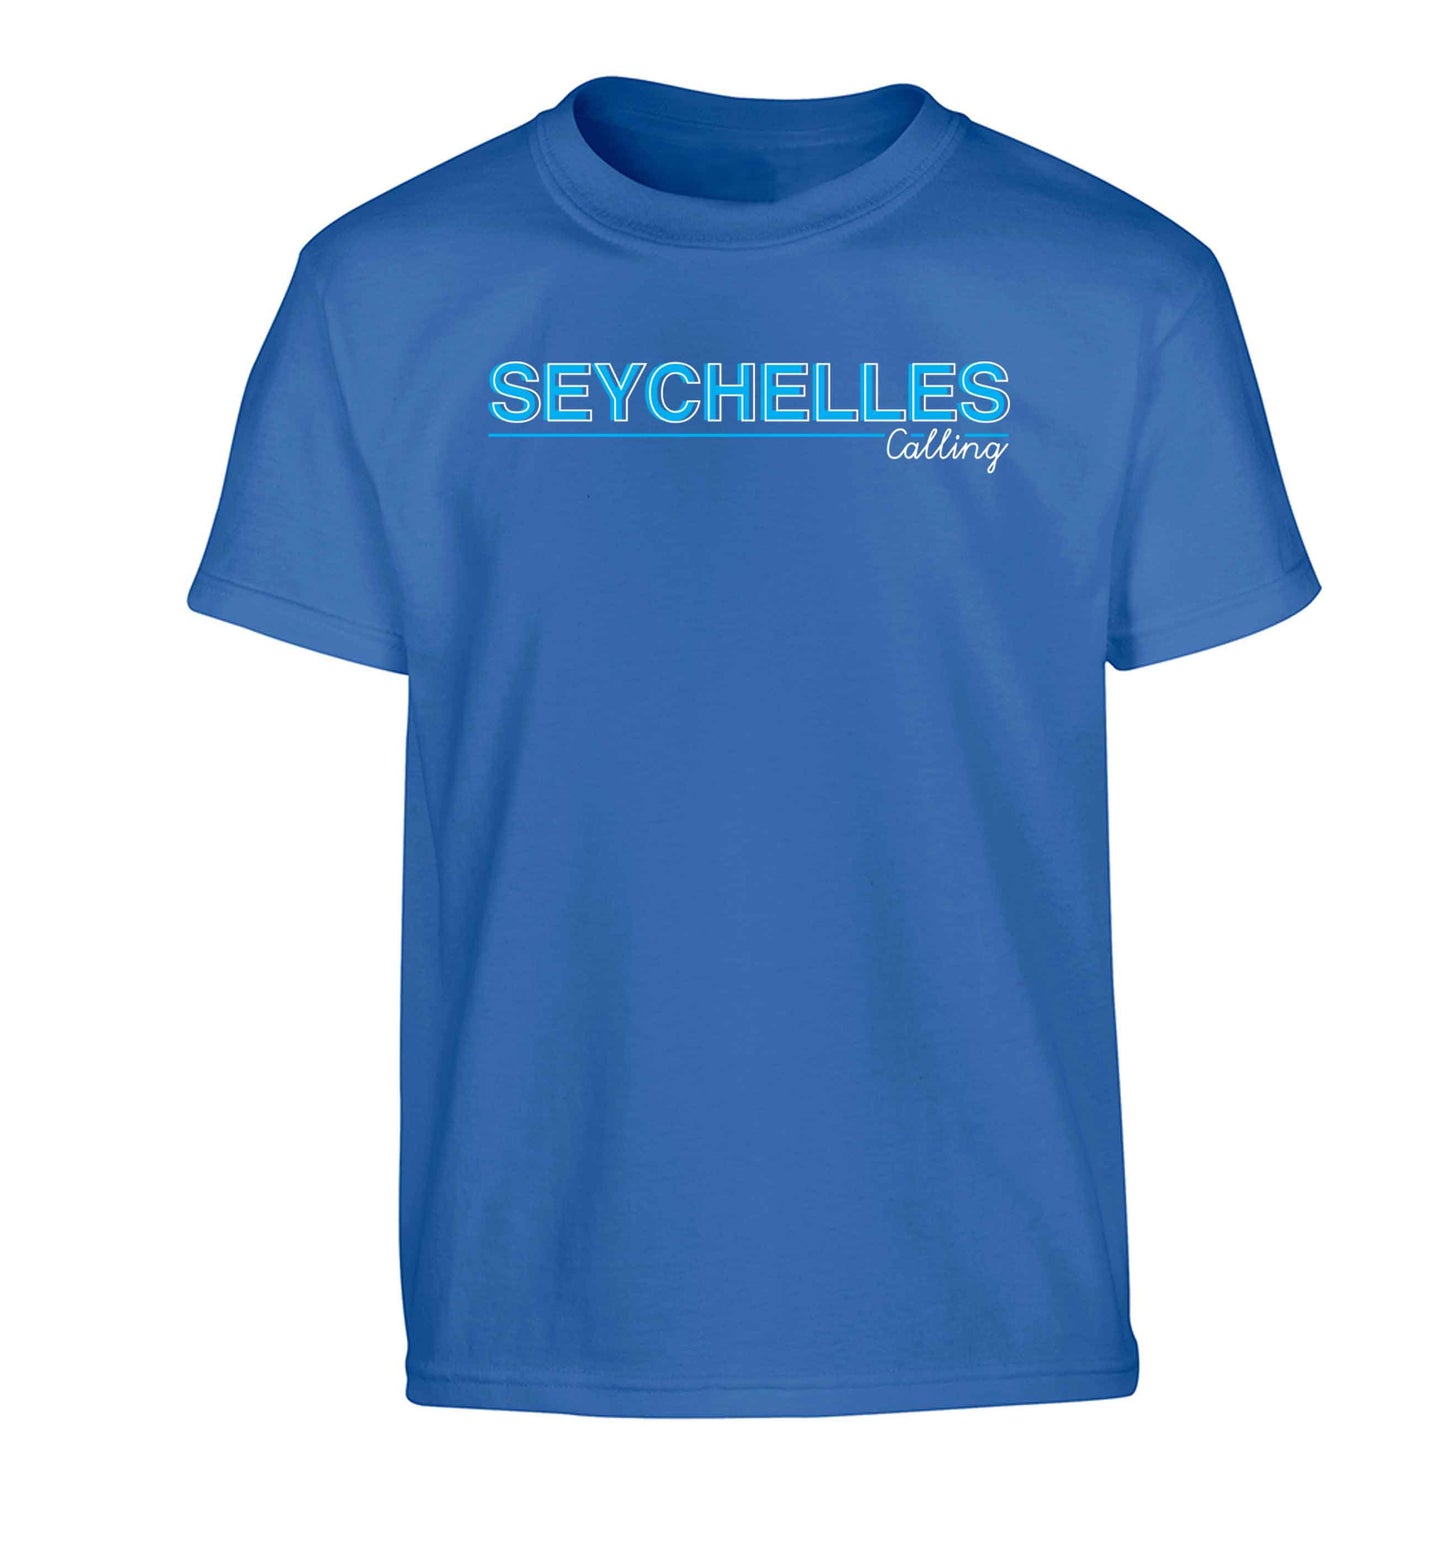 Seychelles calling Children's blue Tshirt 12-13 Years